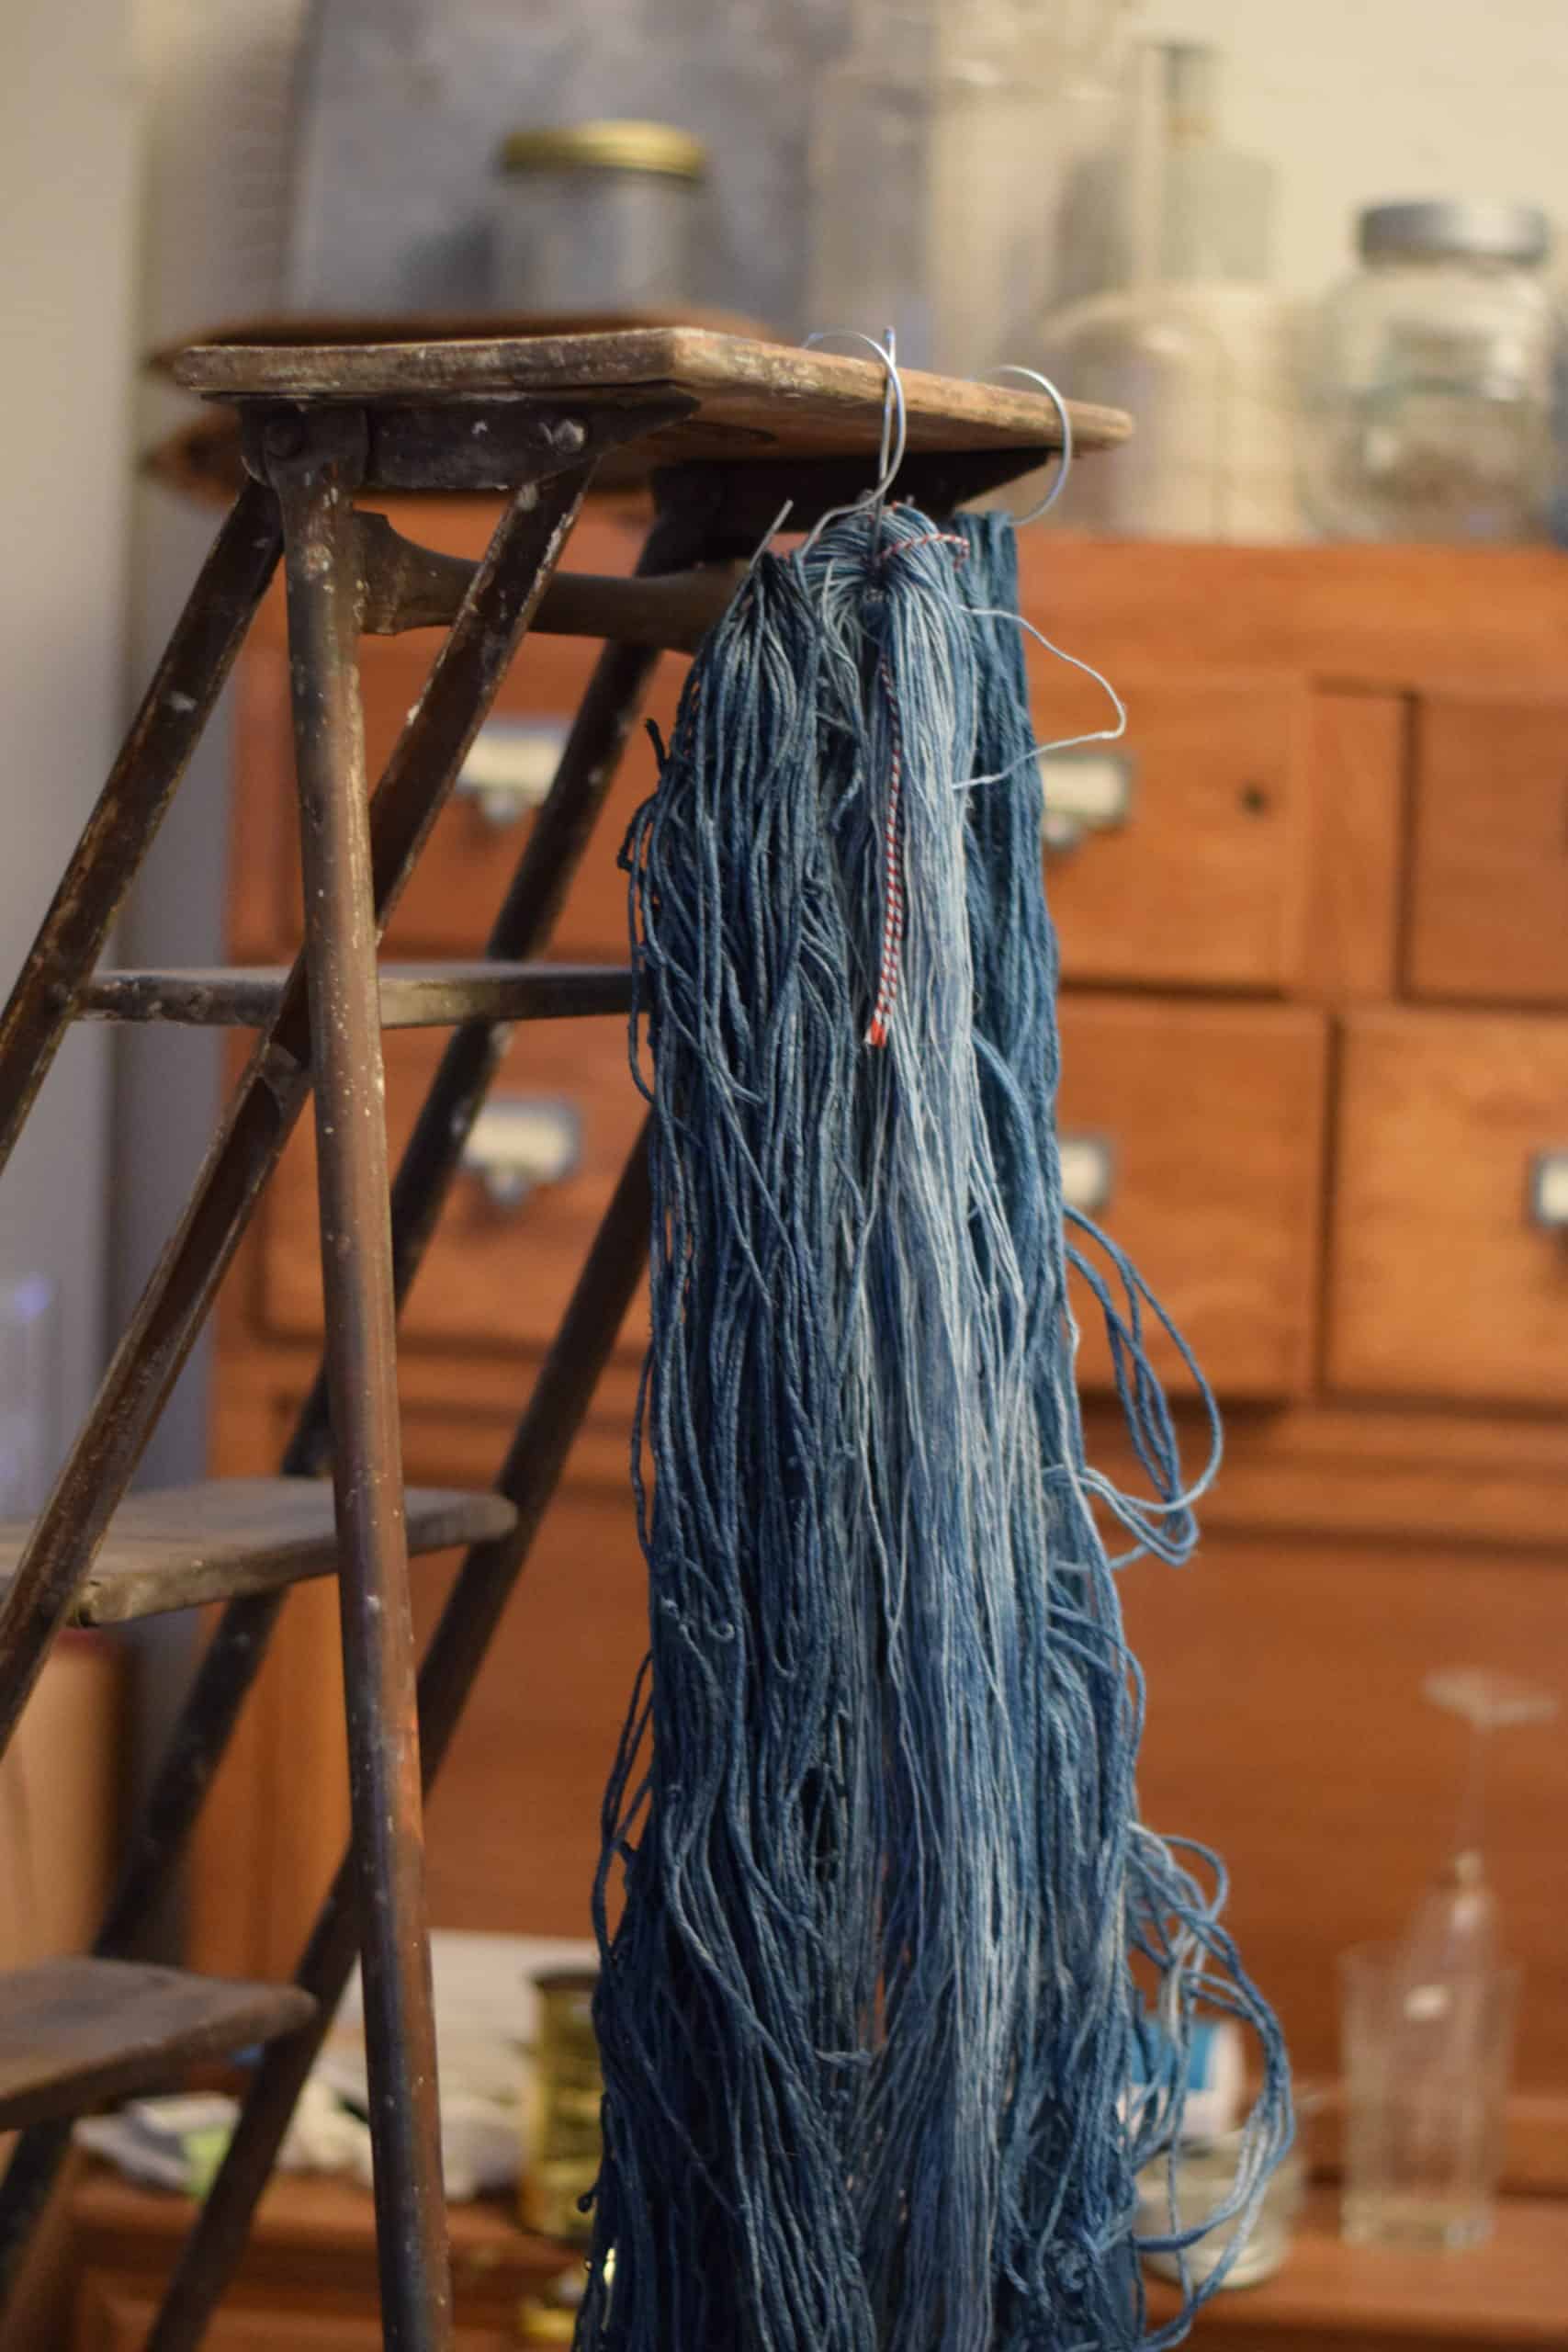 Picture of balls of blue string drying on a stepladder in Aude Franjou's workshop